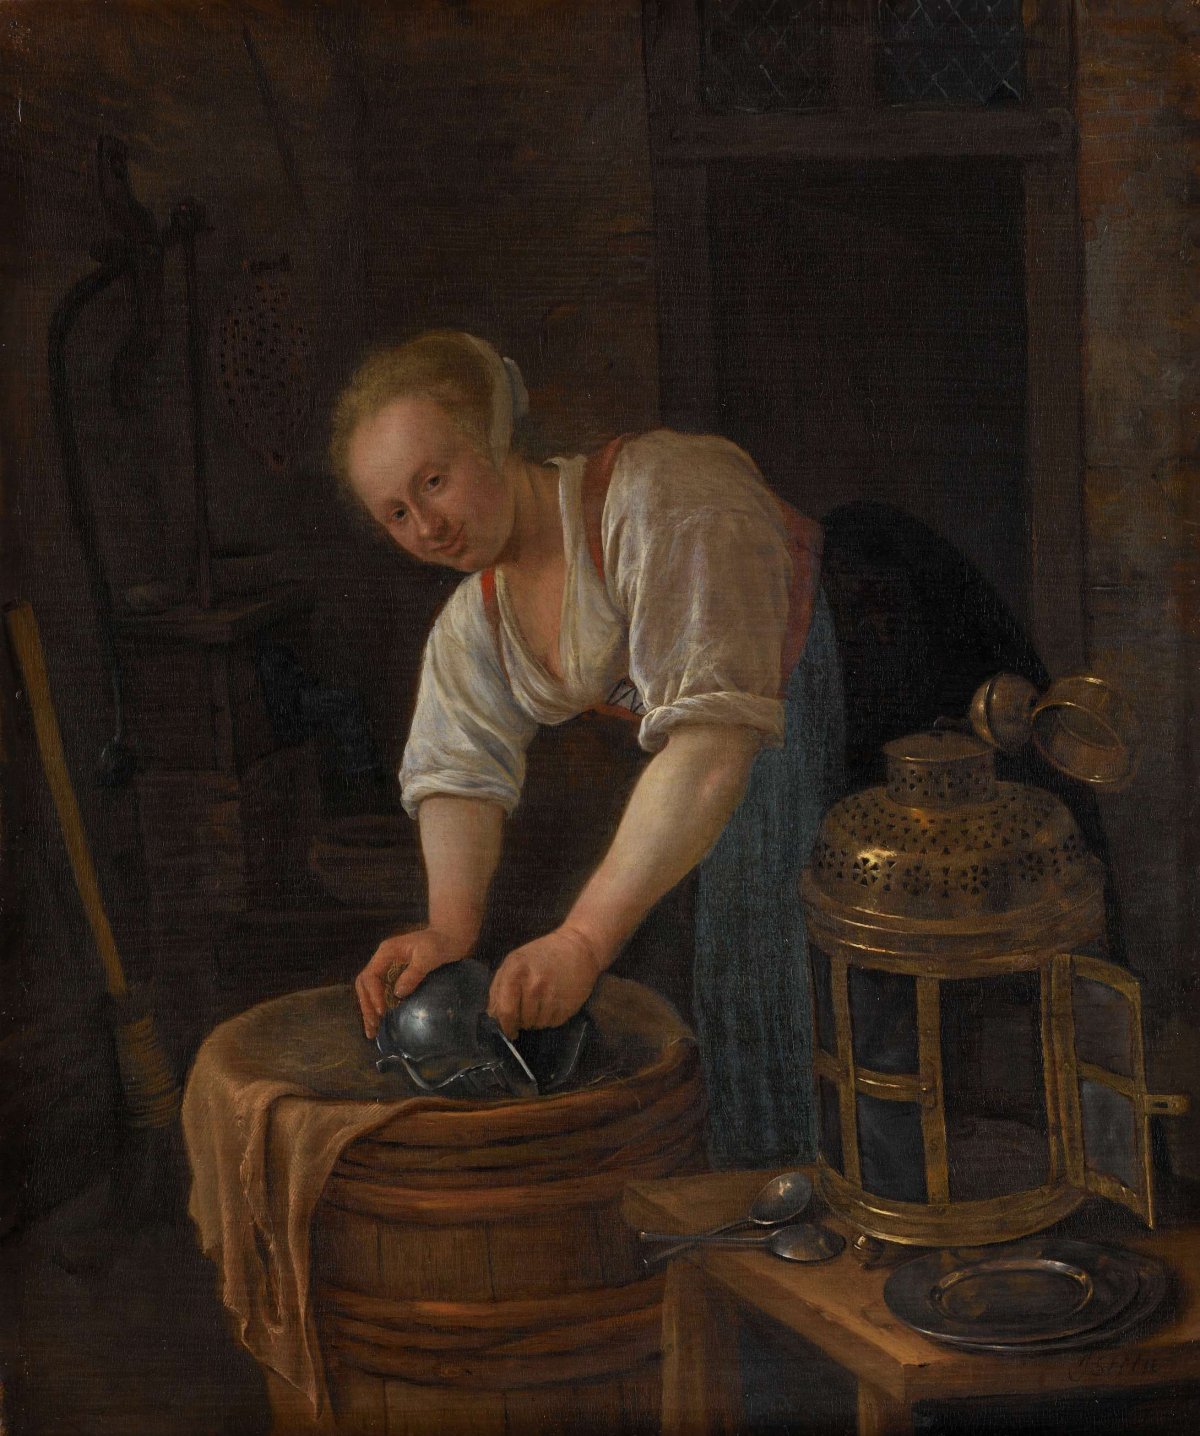 Woman scouring metalware, Jan Havicksz. Steen, 1650 - 1660